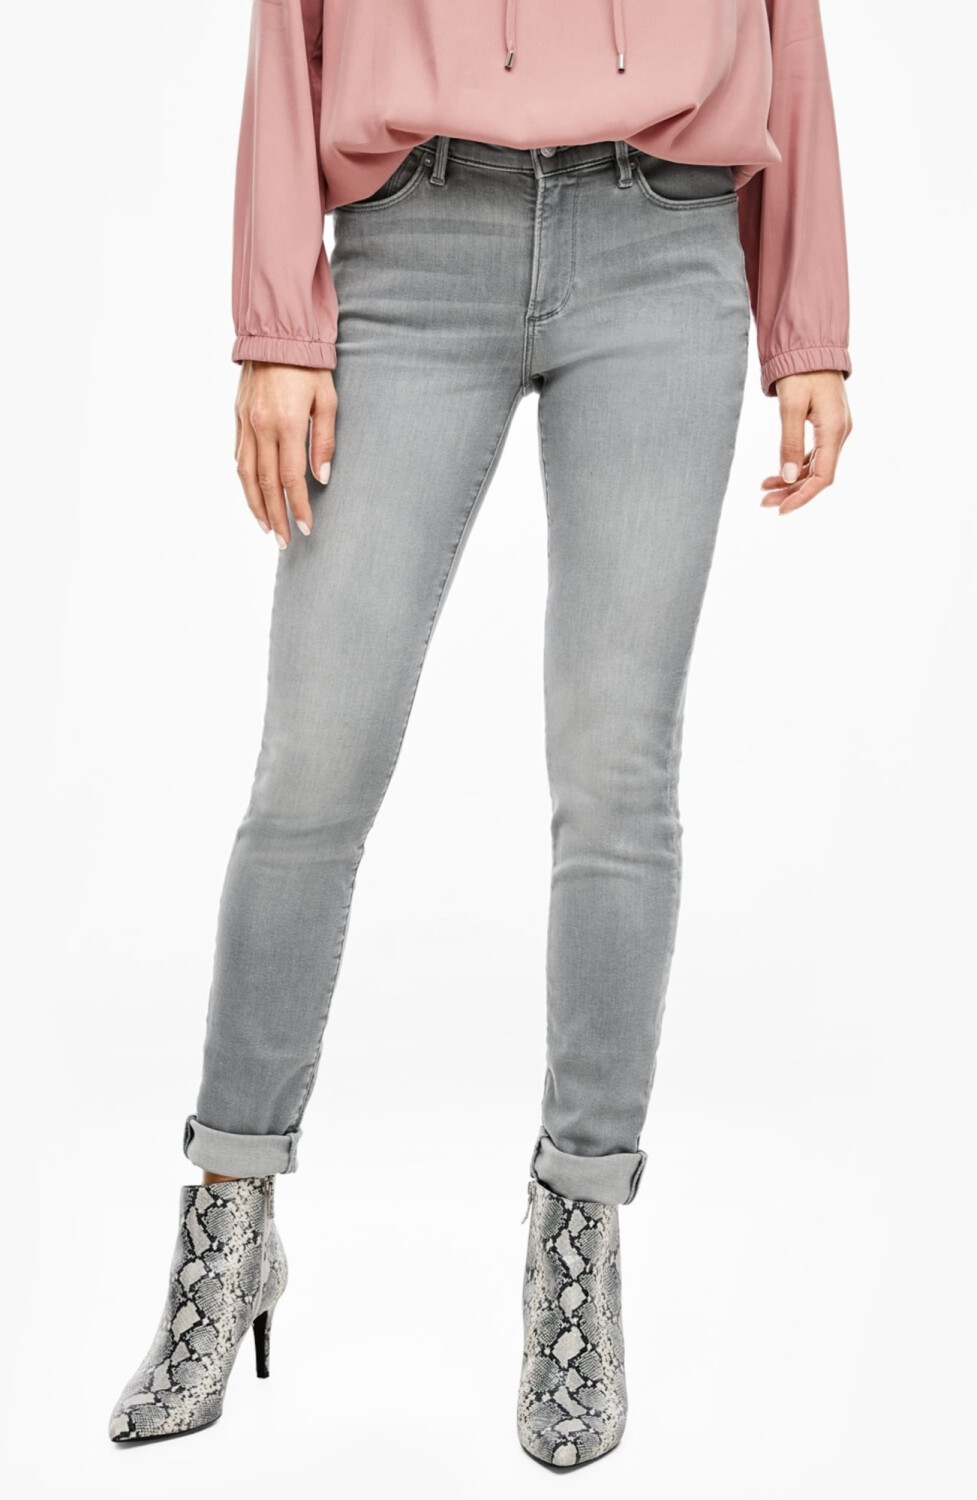 S.Oliver Izabell Skinny Fit Jeans € (04.899.71.6063) grey | 39,19 ab Preisvergleich bei